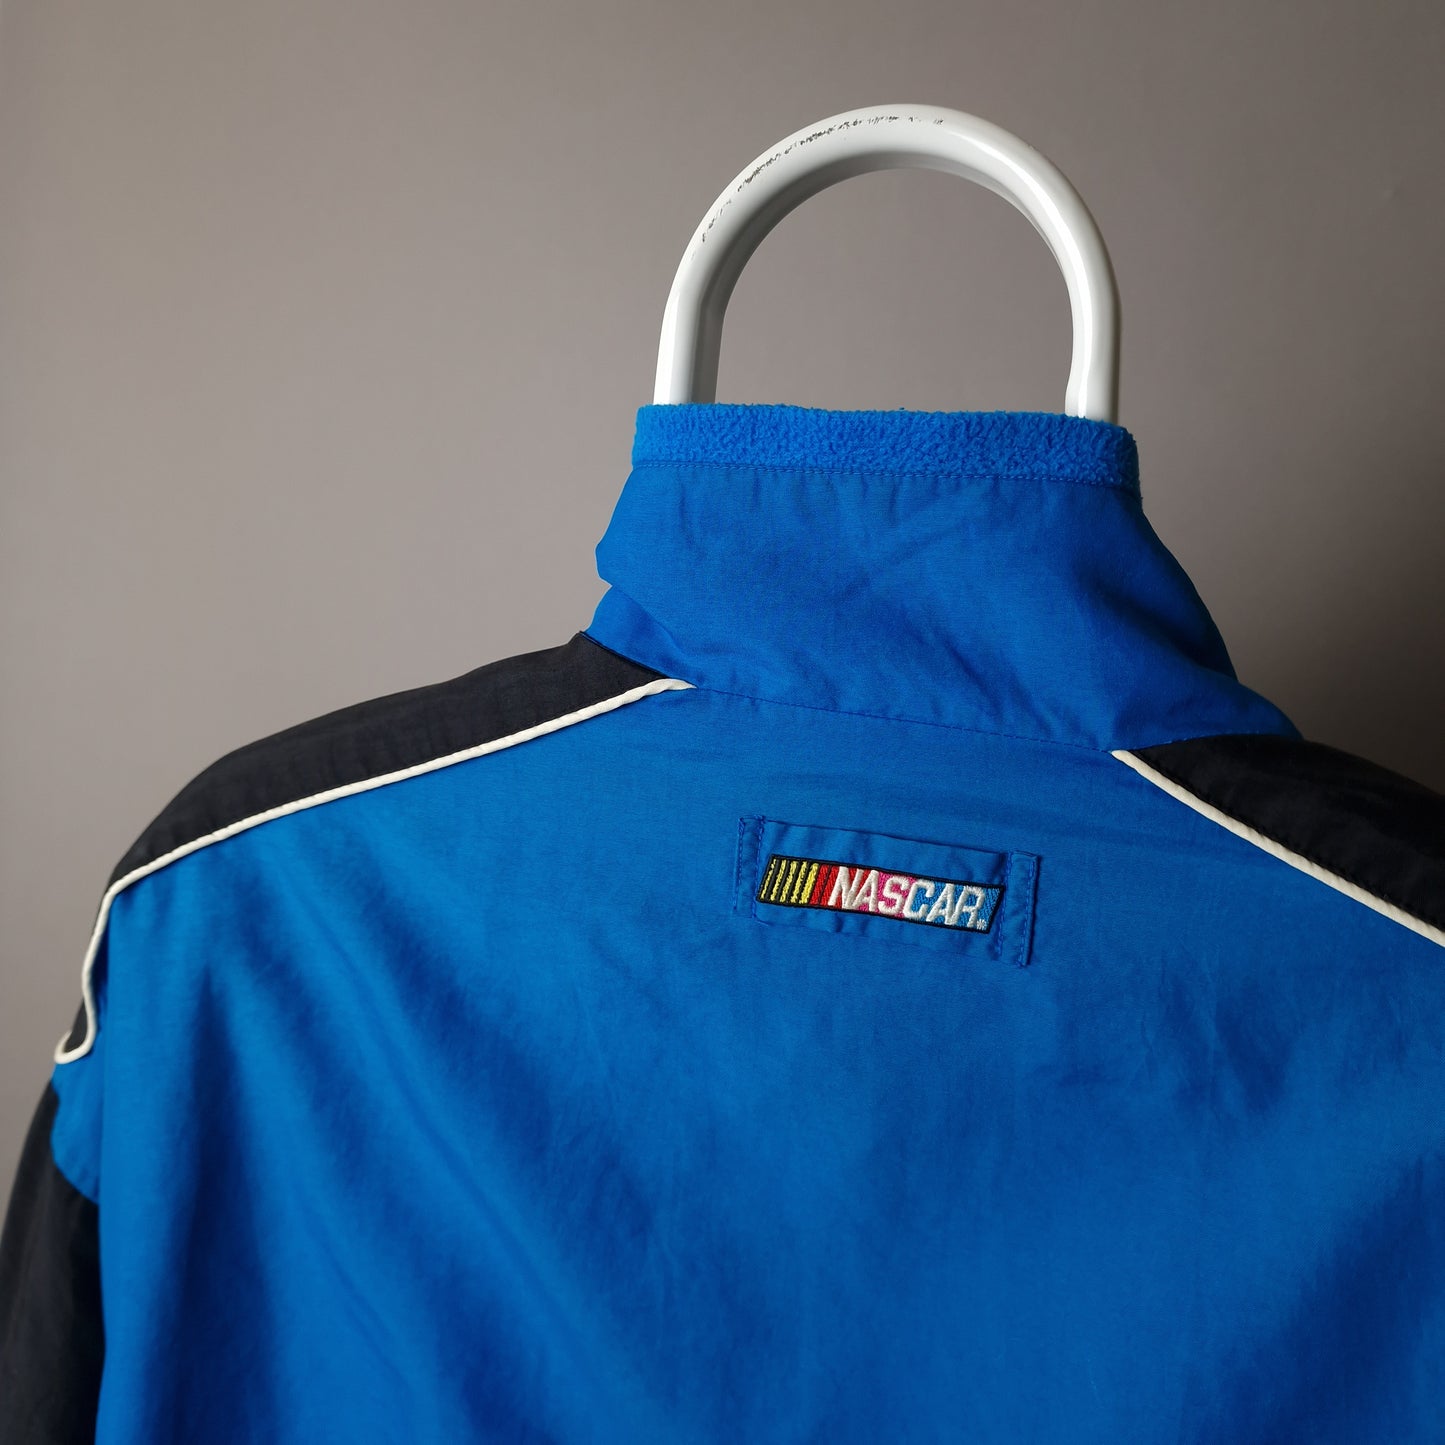 Vintage Nascar racing Mark Martin jacket in blue and black - XL